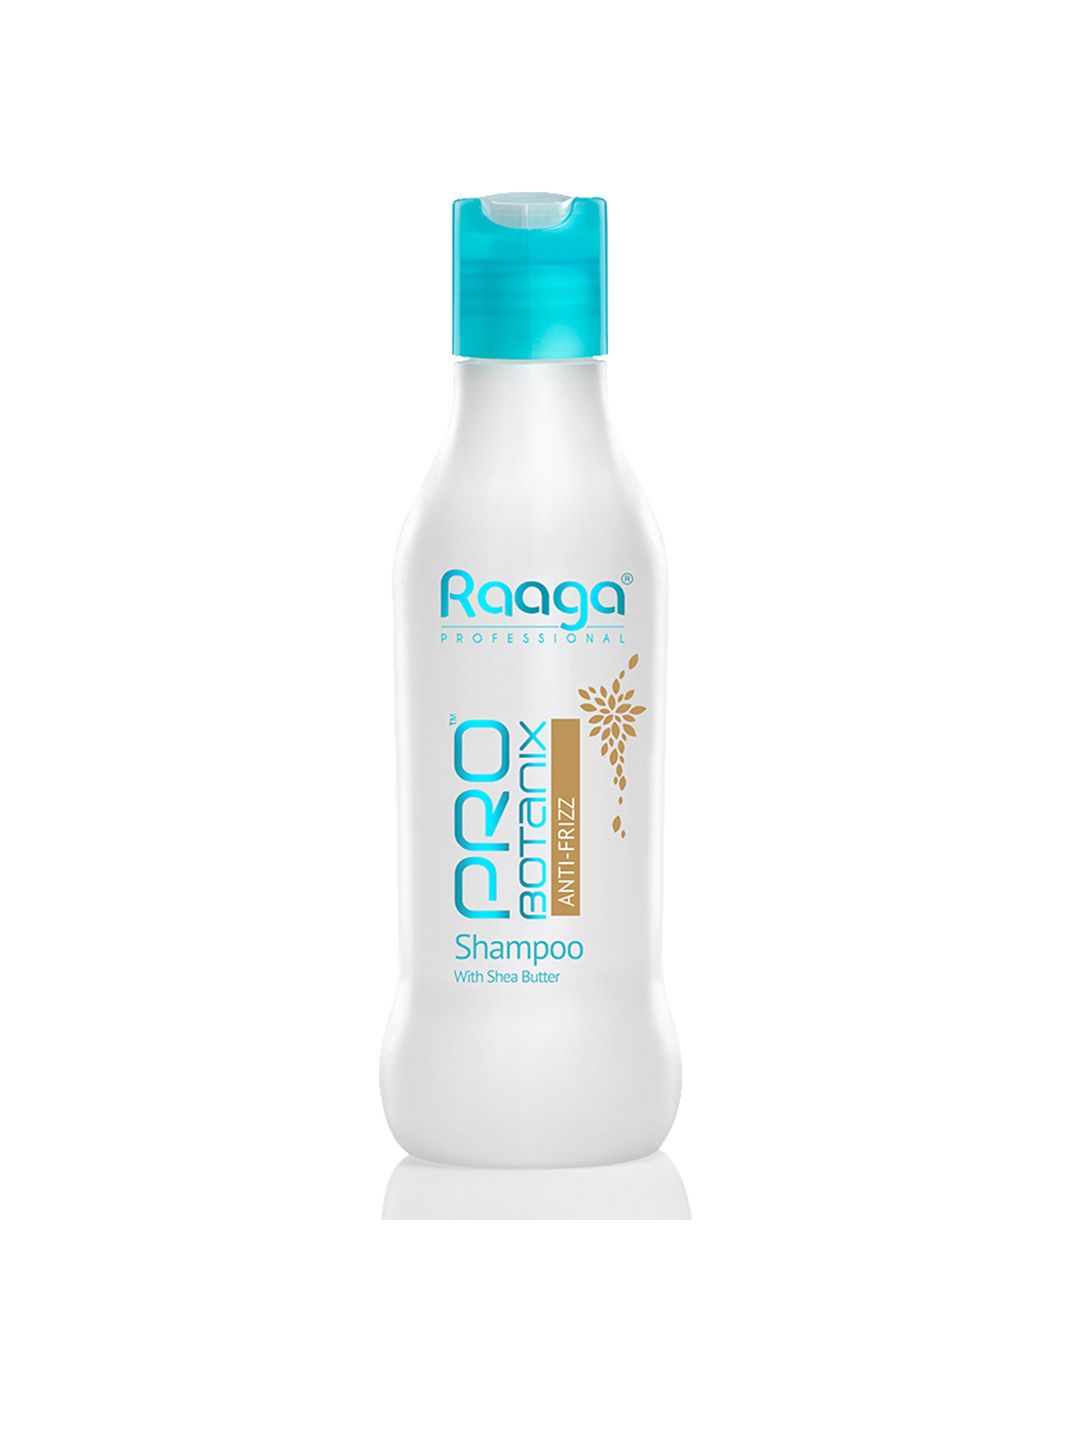 Raaga PROFESSIONAL Pro Botanix Anti Frizz Shampoo with Shea Butter 200 ml Price in India